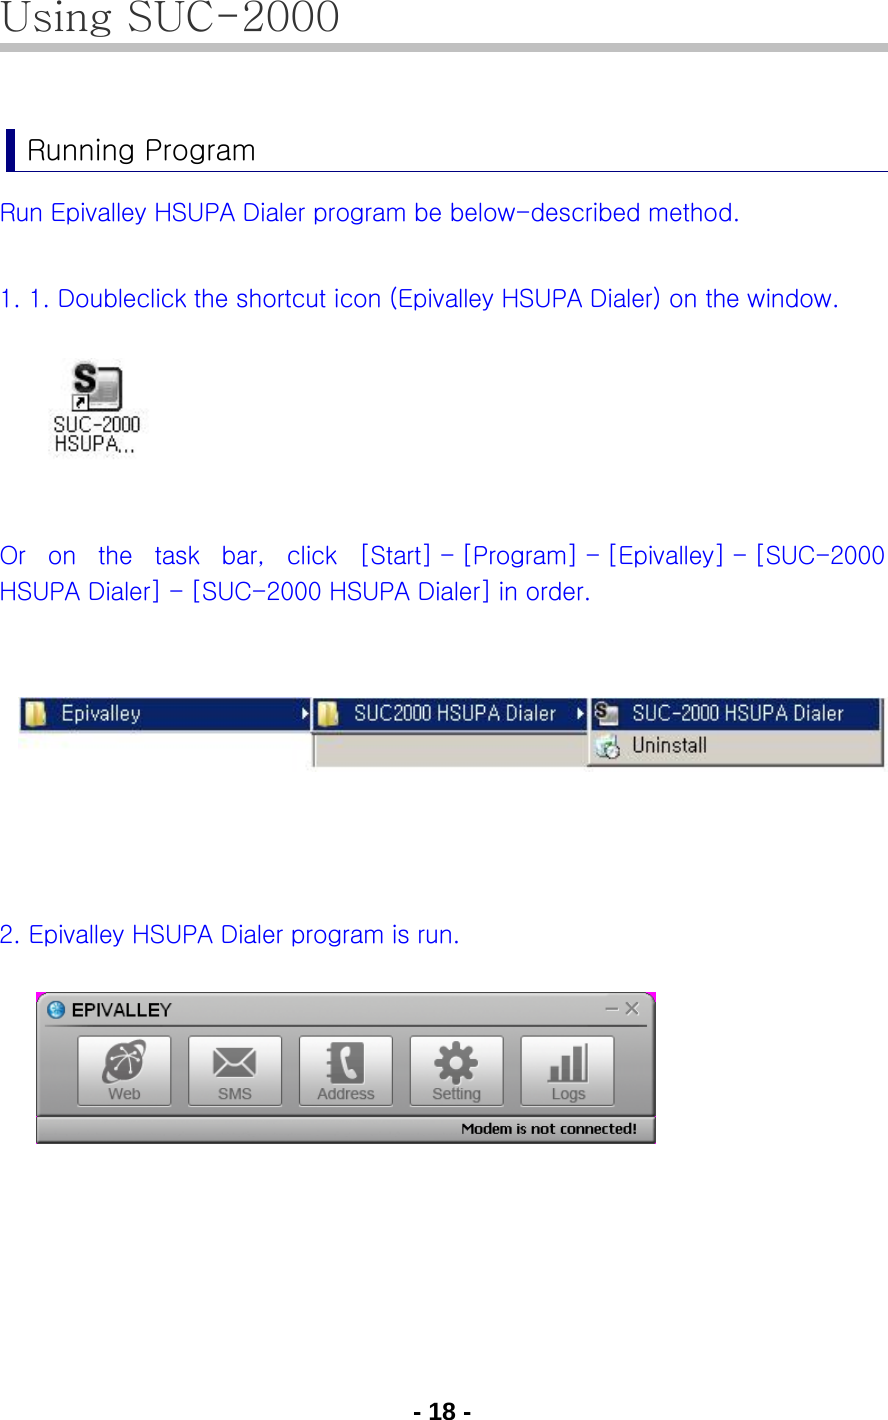 - 18 - Using SUC-2000  Running Program Run Epivalley HSUPA Dialer program be below-described method.  1. 1. Doubleclick the shortcut icon (Epivalley HSUPA Dialer) on the window.      Or  on  the  task  bar,  click  [Start] - [Program] - [Epivalley] - [SUC-2000 HSUPA Dialer] - [SUC-2000 HSUPA Dialer] in order.        2. Epivalley HSUPA Dialer program is run.           